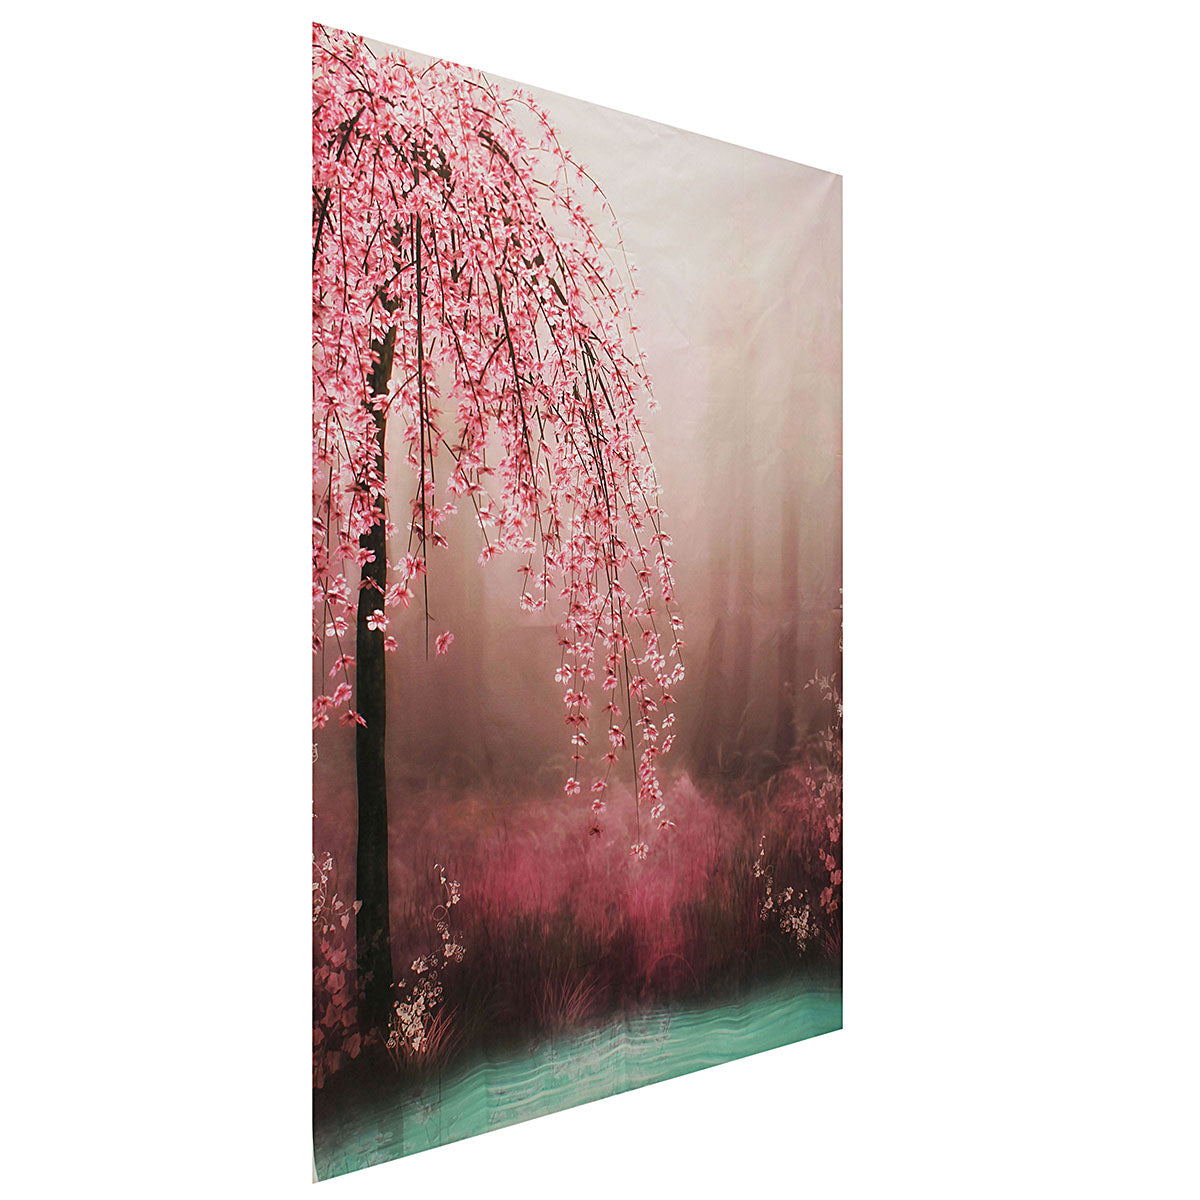 7x5ft Romantic Flower Vinyl Photography Background Photo studio Backdrop Props